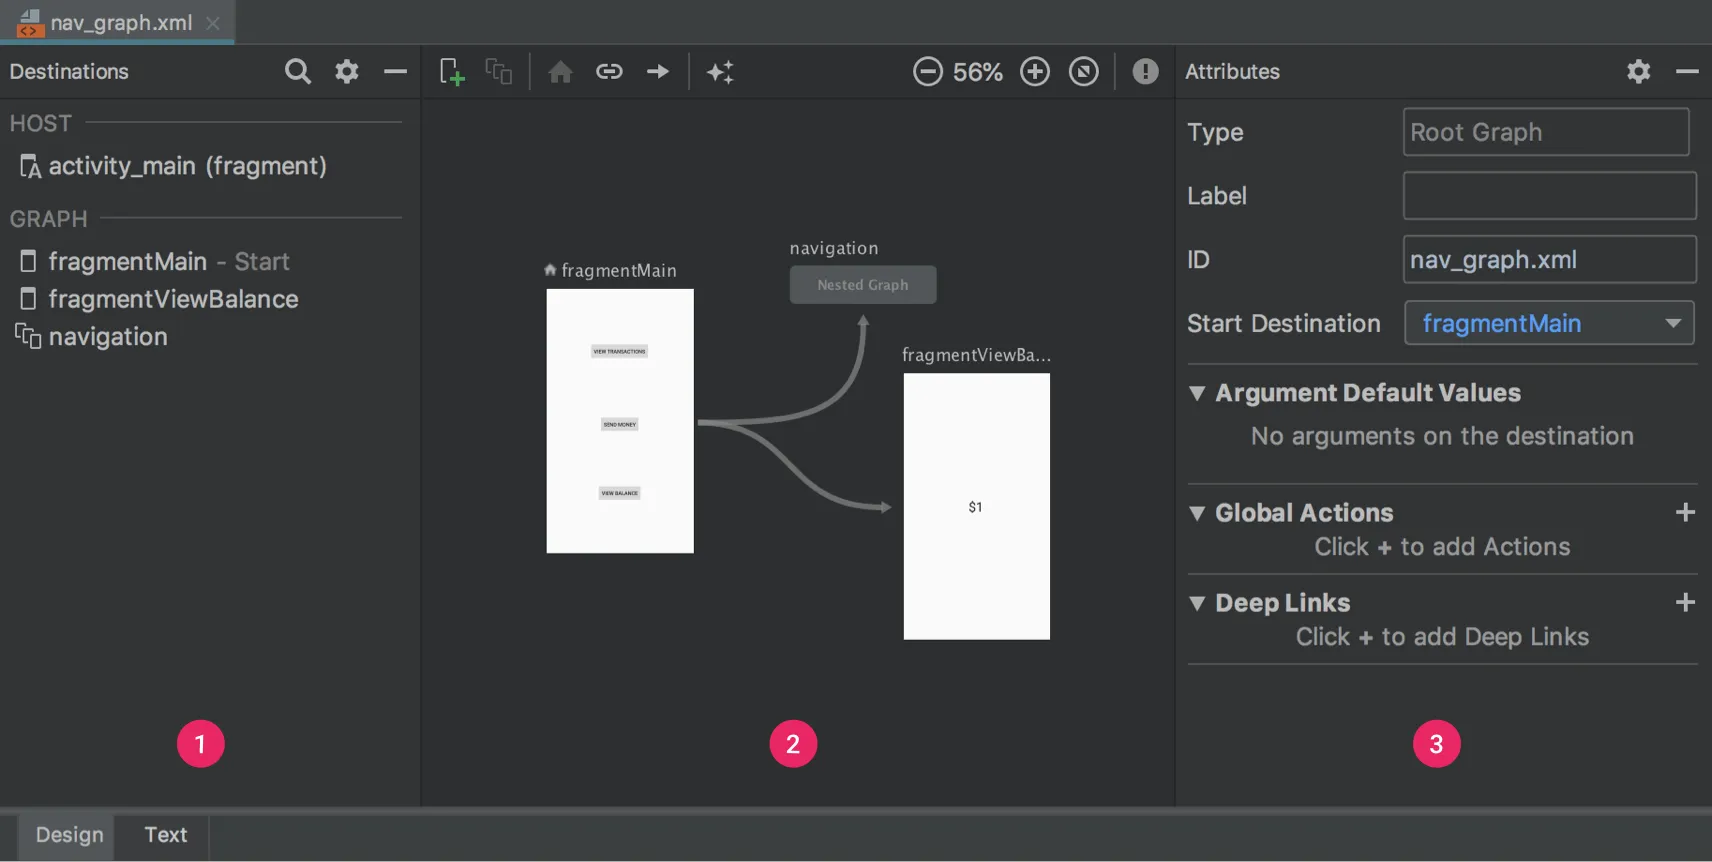 Android Studio navigation editor. Source: https://developer.android.com/guide/navigation/navigation-getting-started#nav-editor